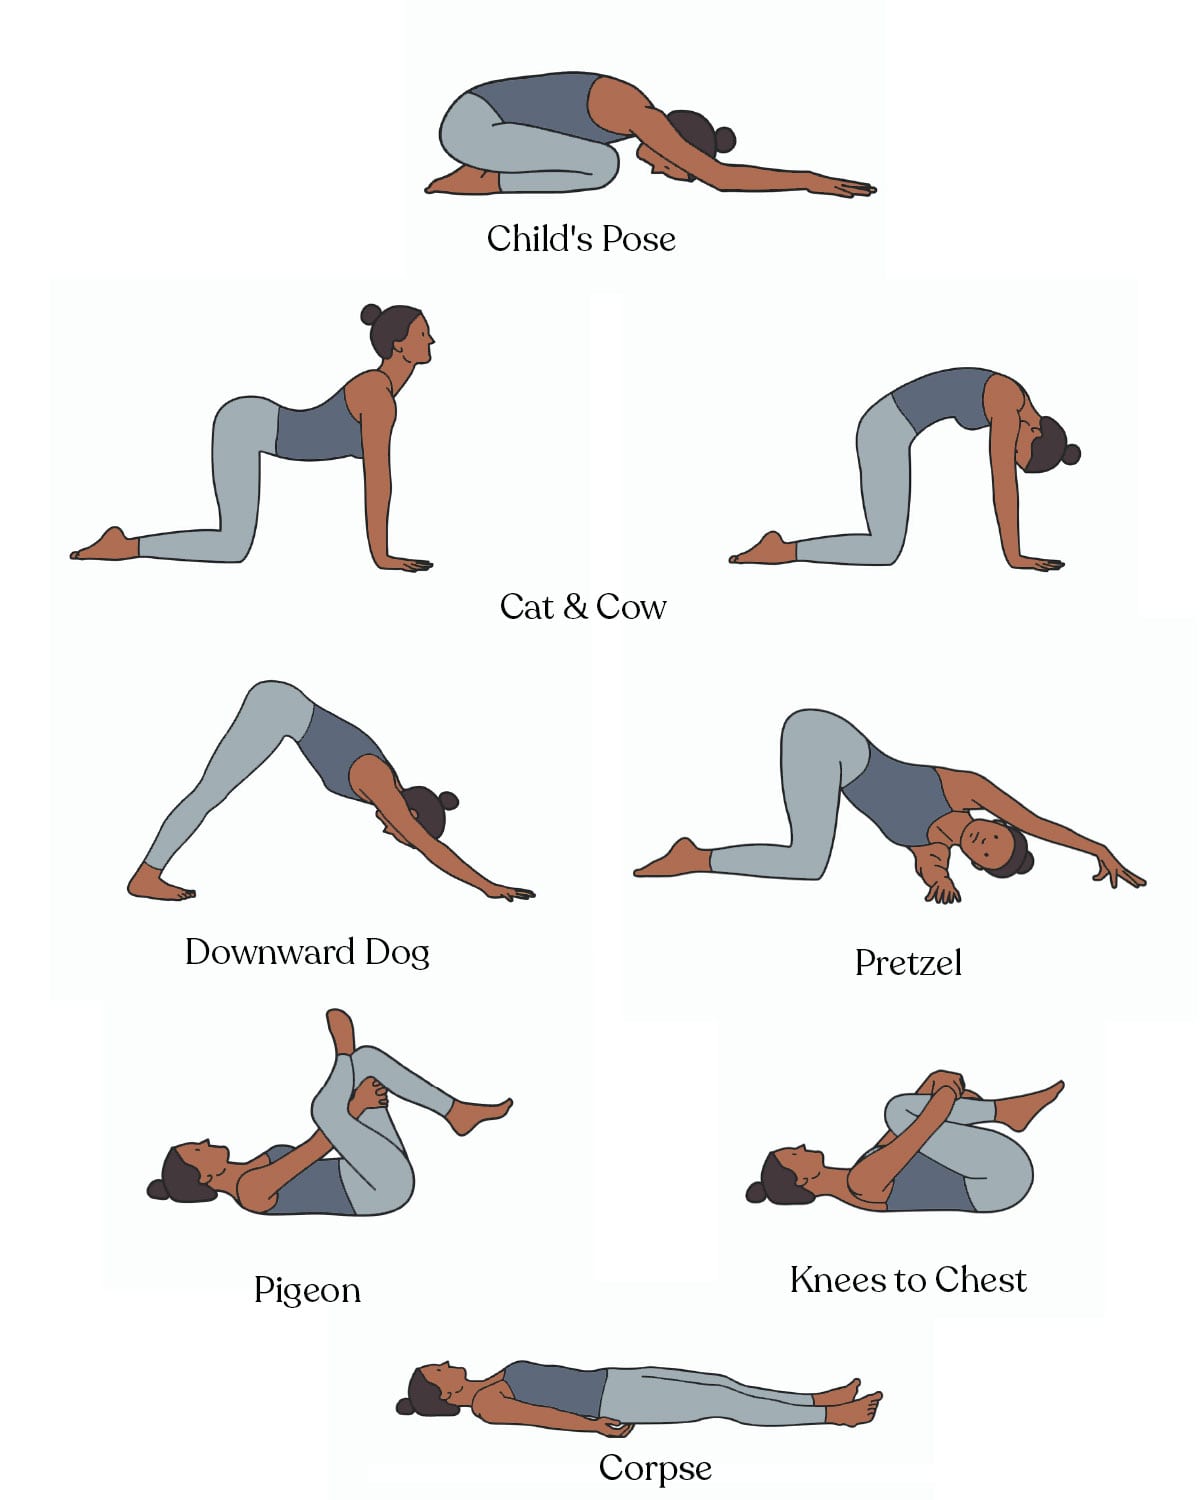 Yoga poses for slim waist